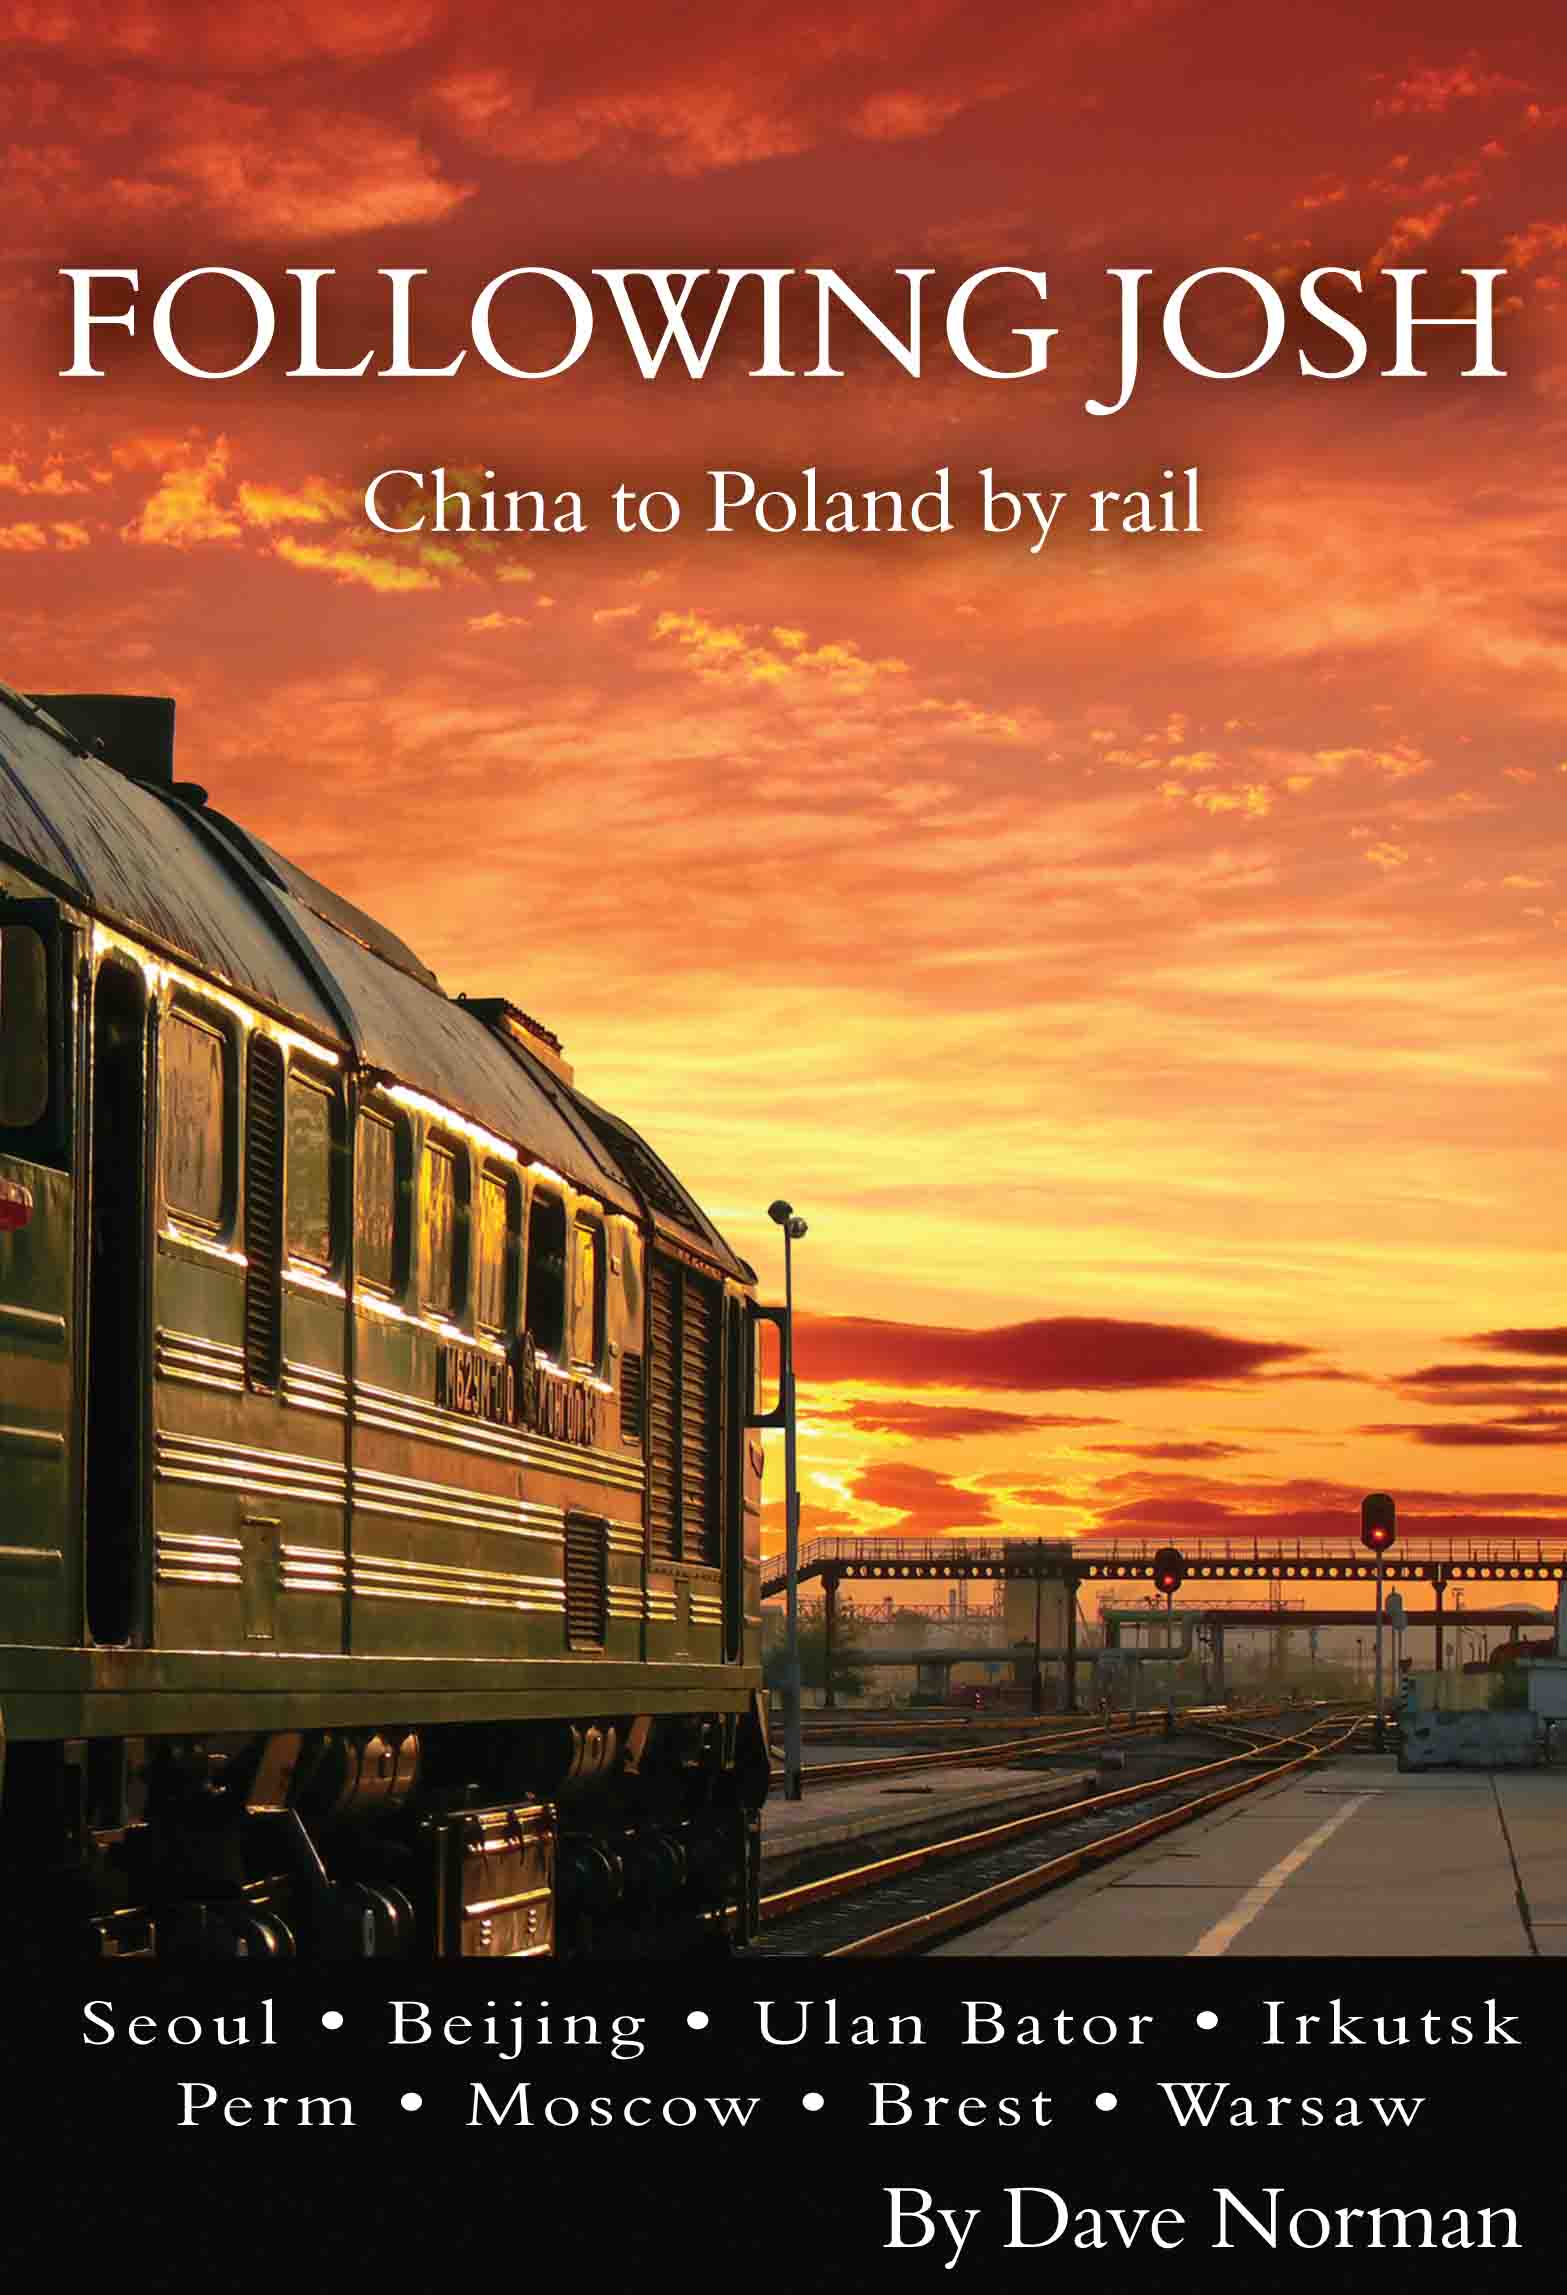 Ride the Trans Siberian Railroad!